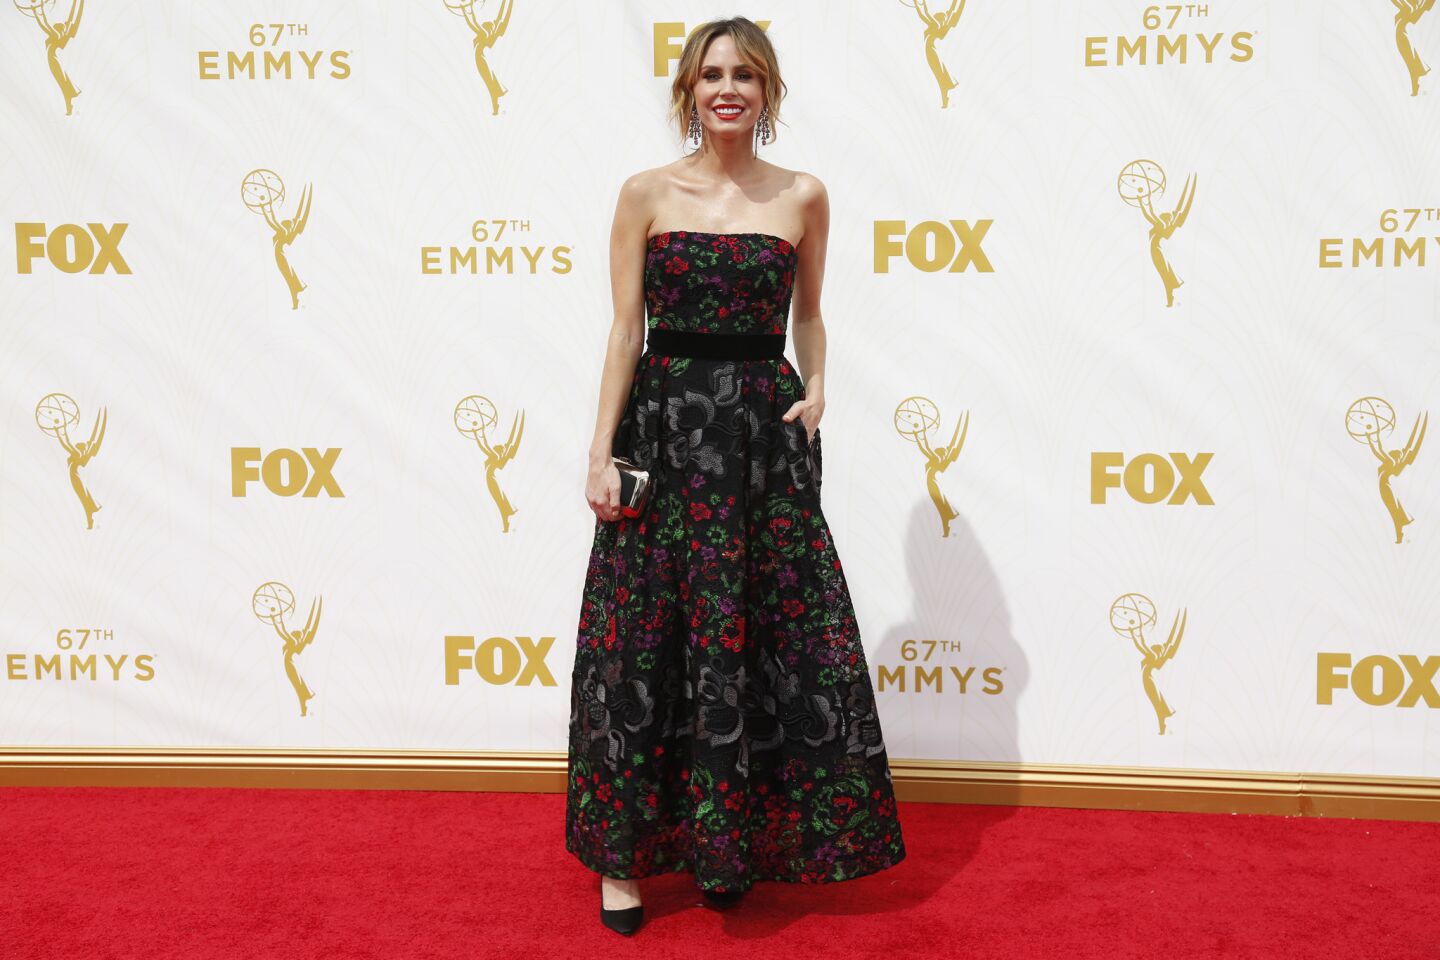 Emmys red carpet